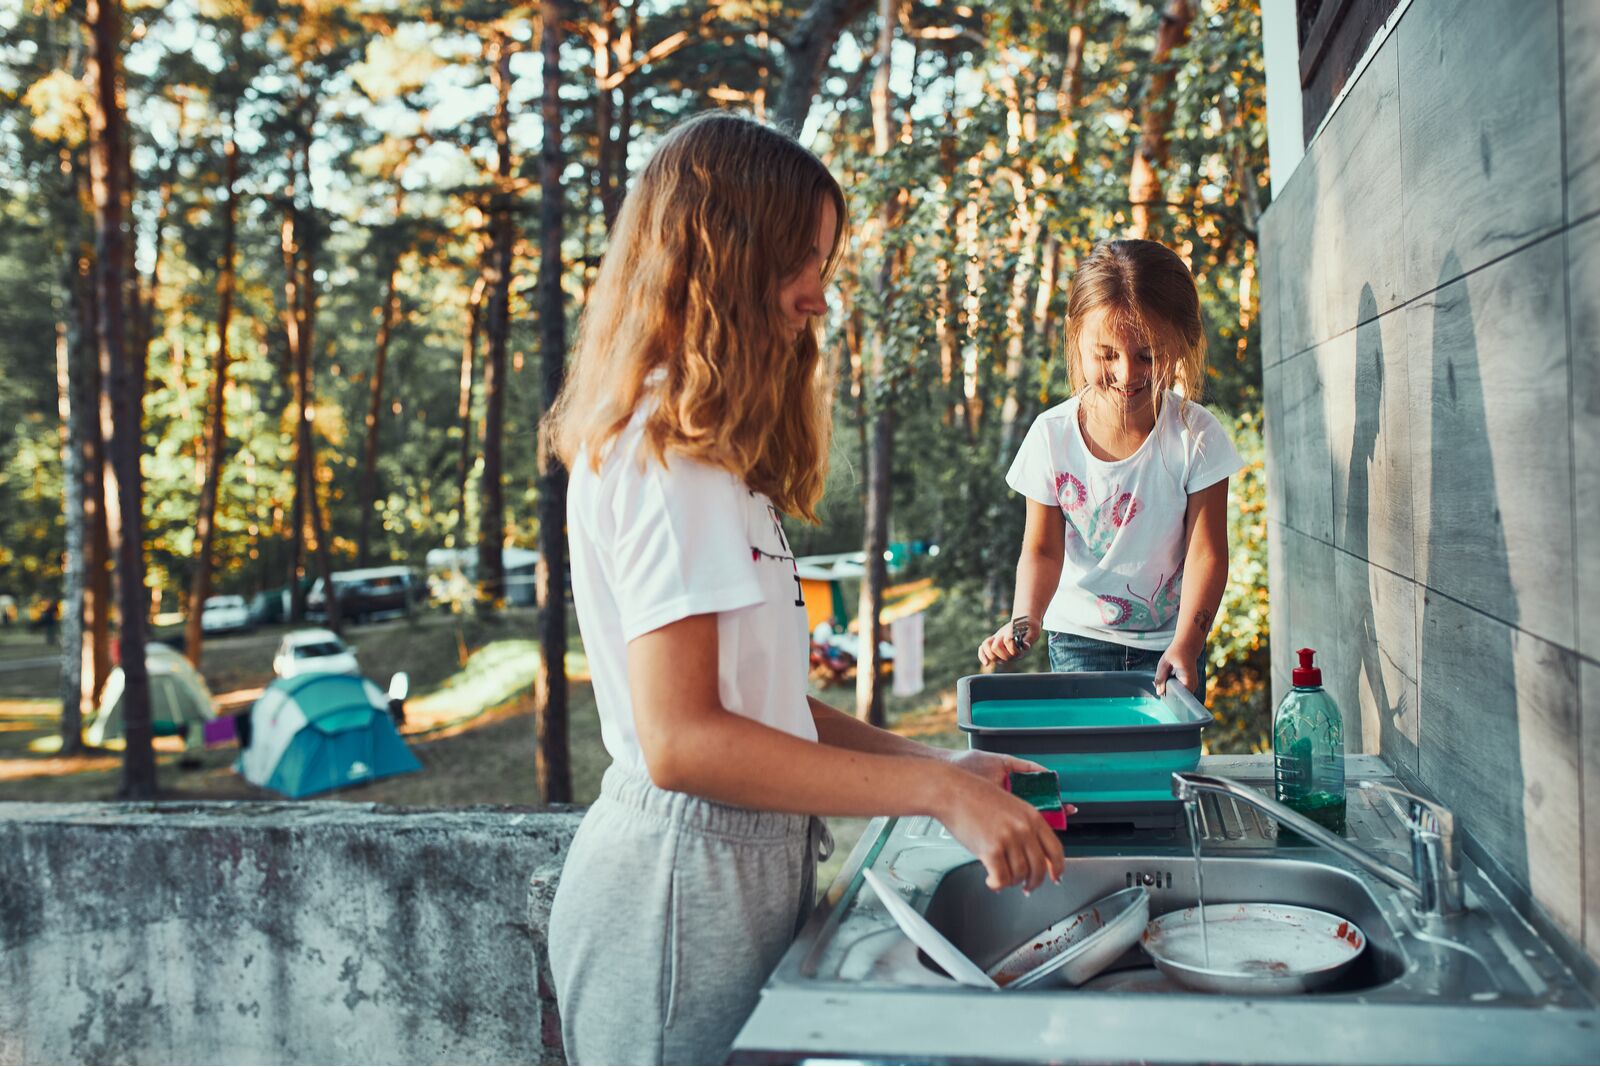 Young girls washing dishes at camp